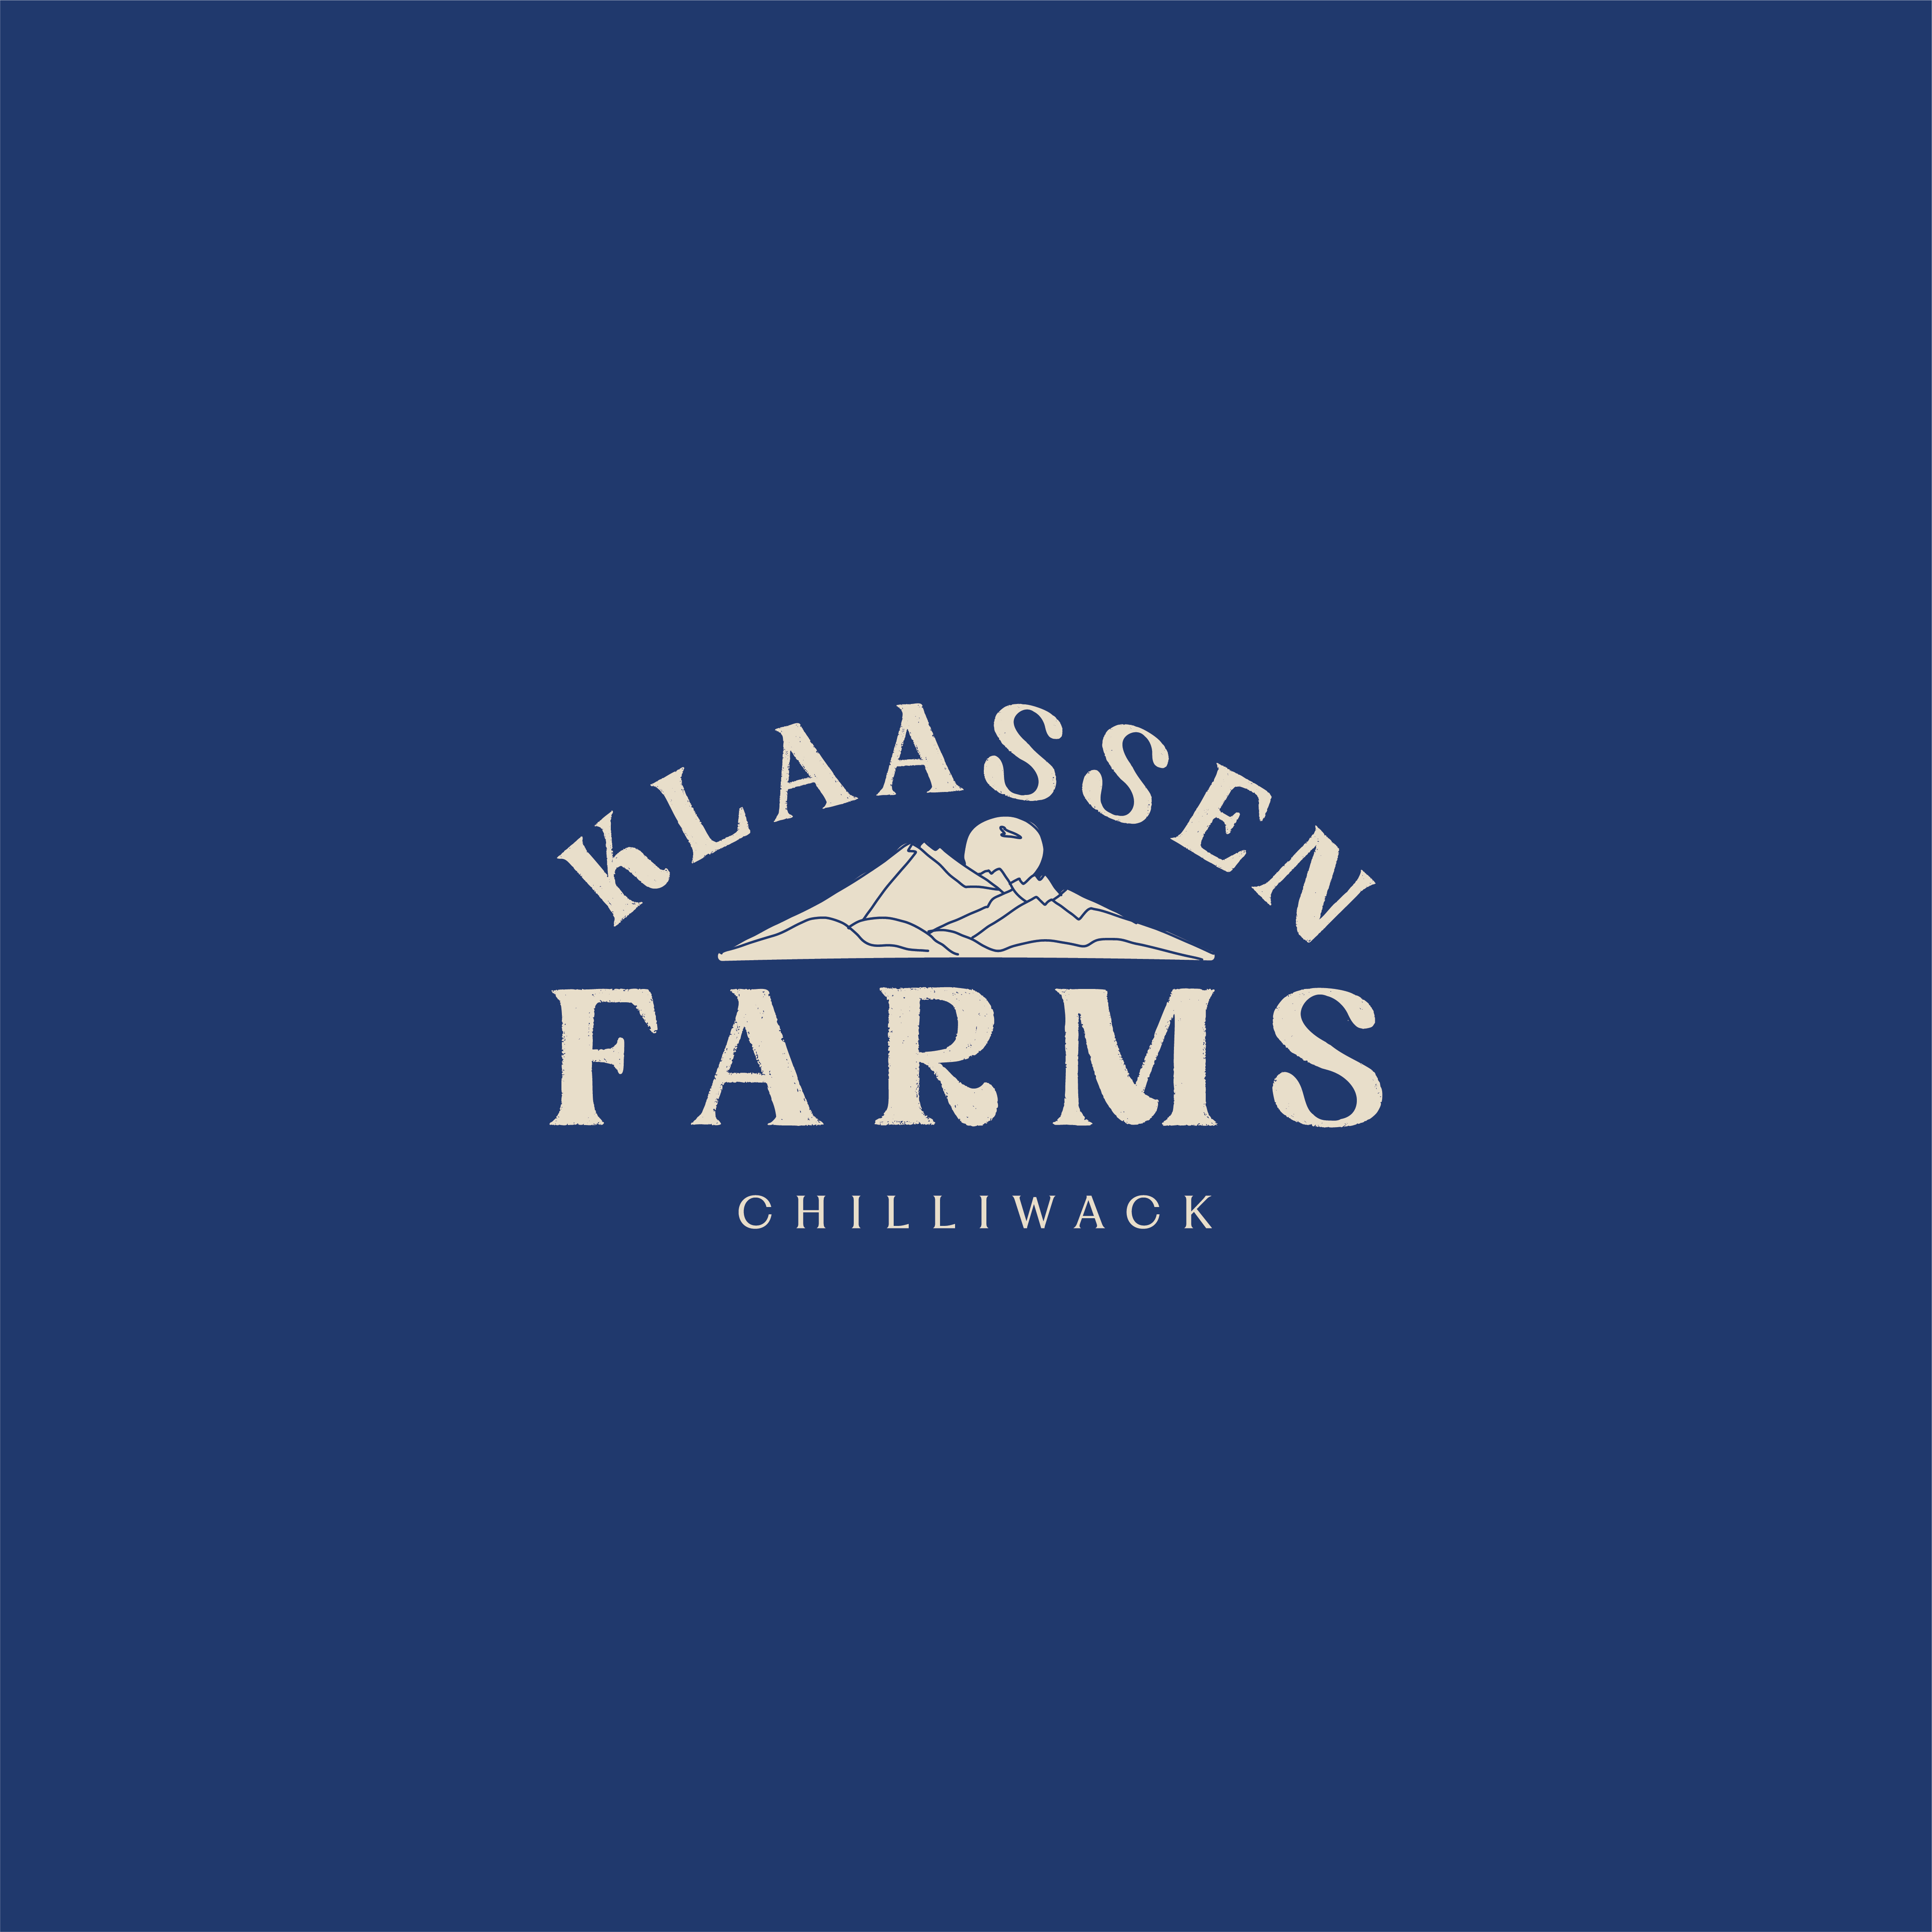 Klaassen Farms